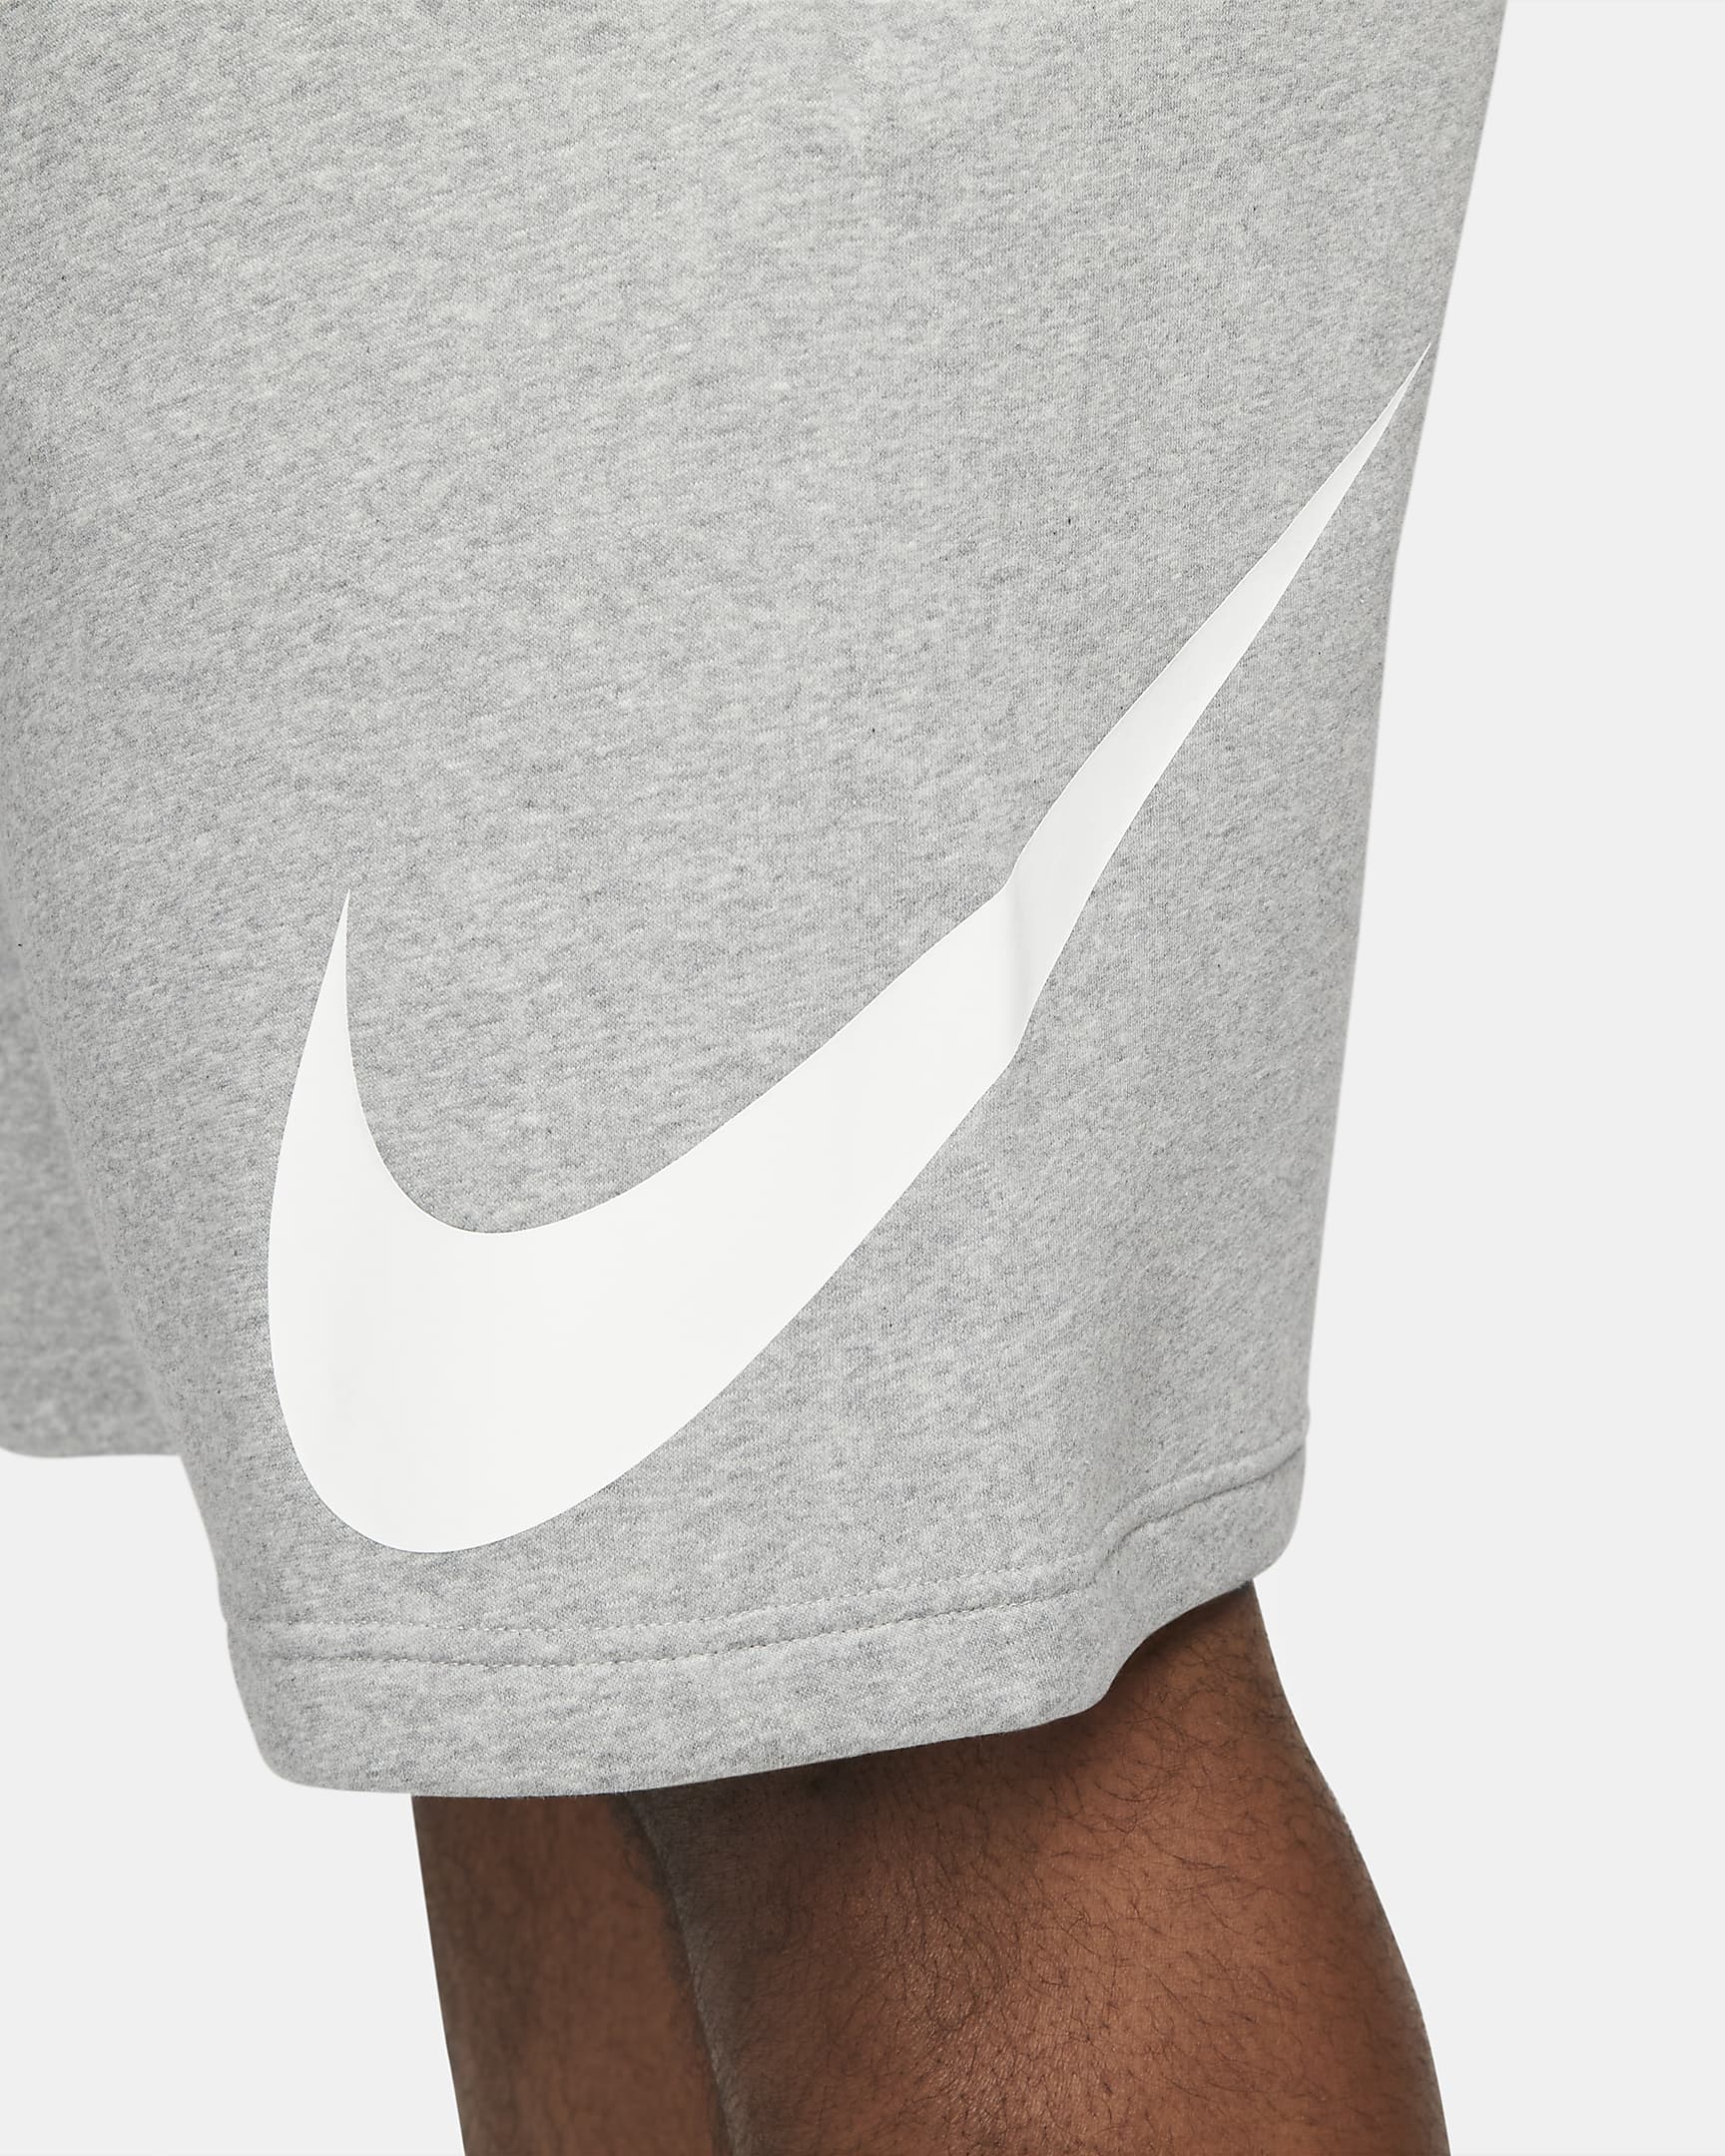 Nike Sportswear Club Men's Graphic Shorts - Dark Grey Heather/White/White